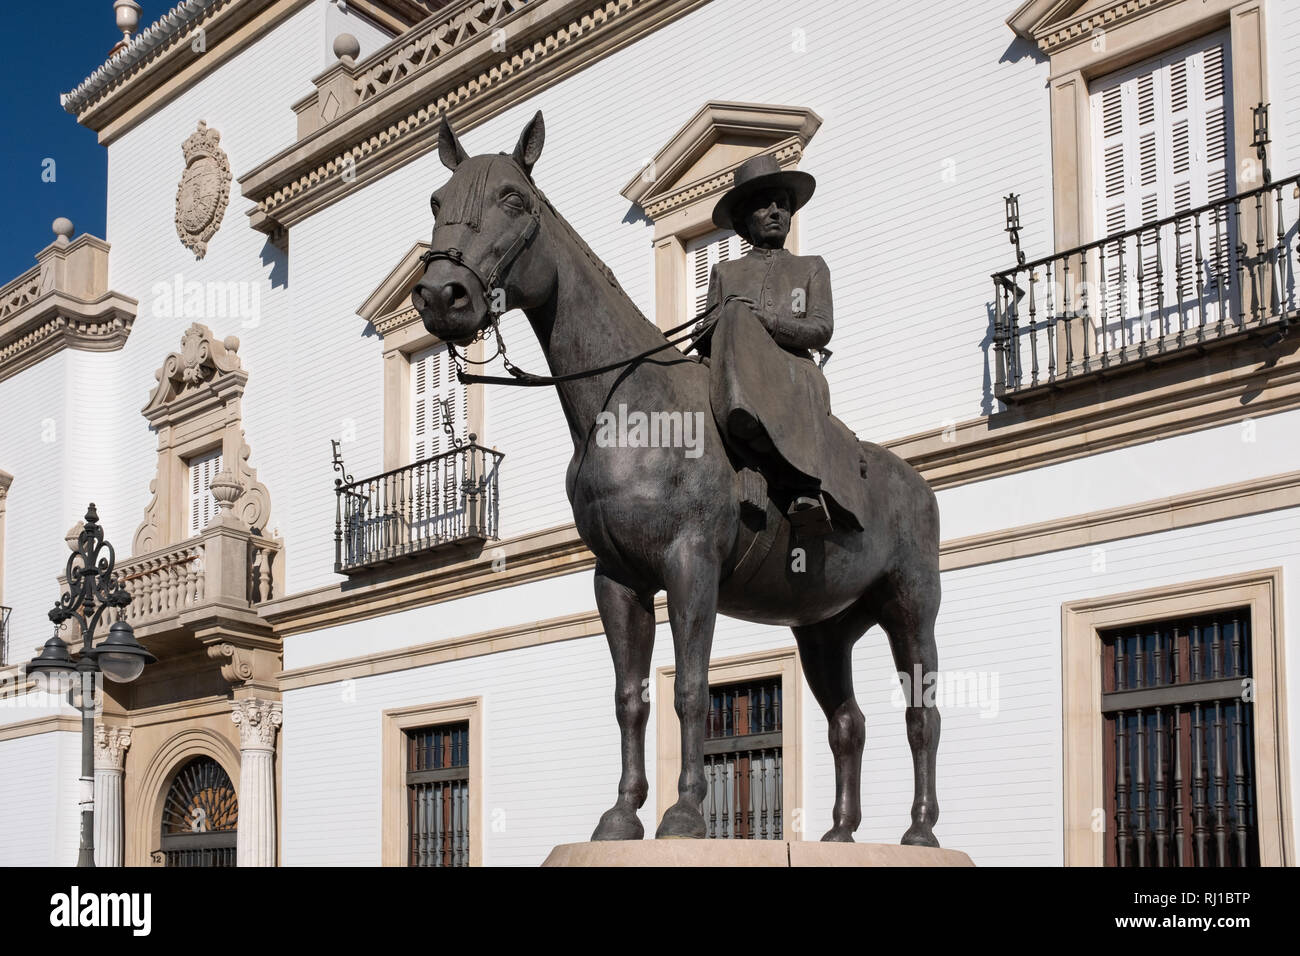 Statue of Condesa De Barcelona on horse back Plaza De Toros Seville Spain Stock Photo